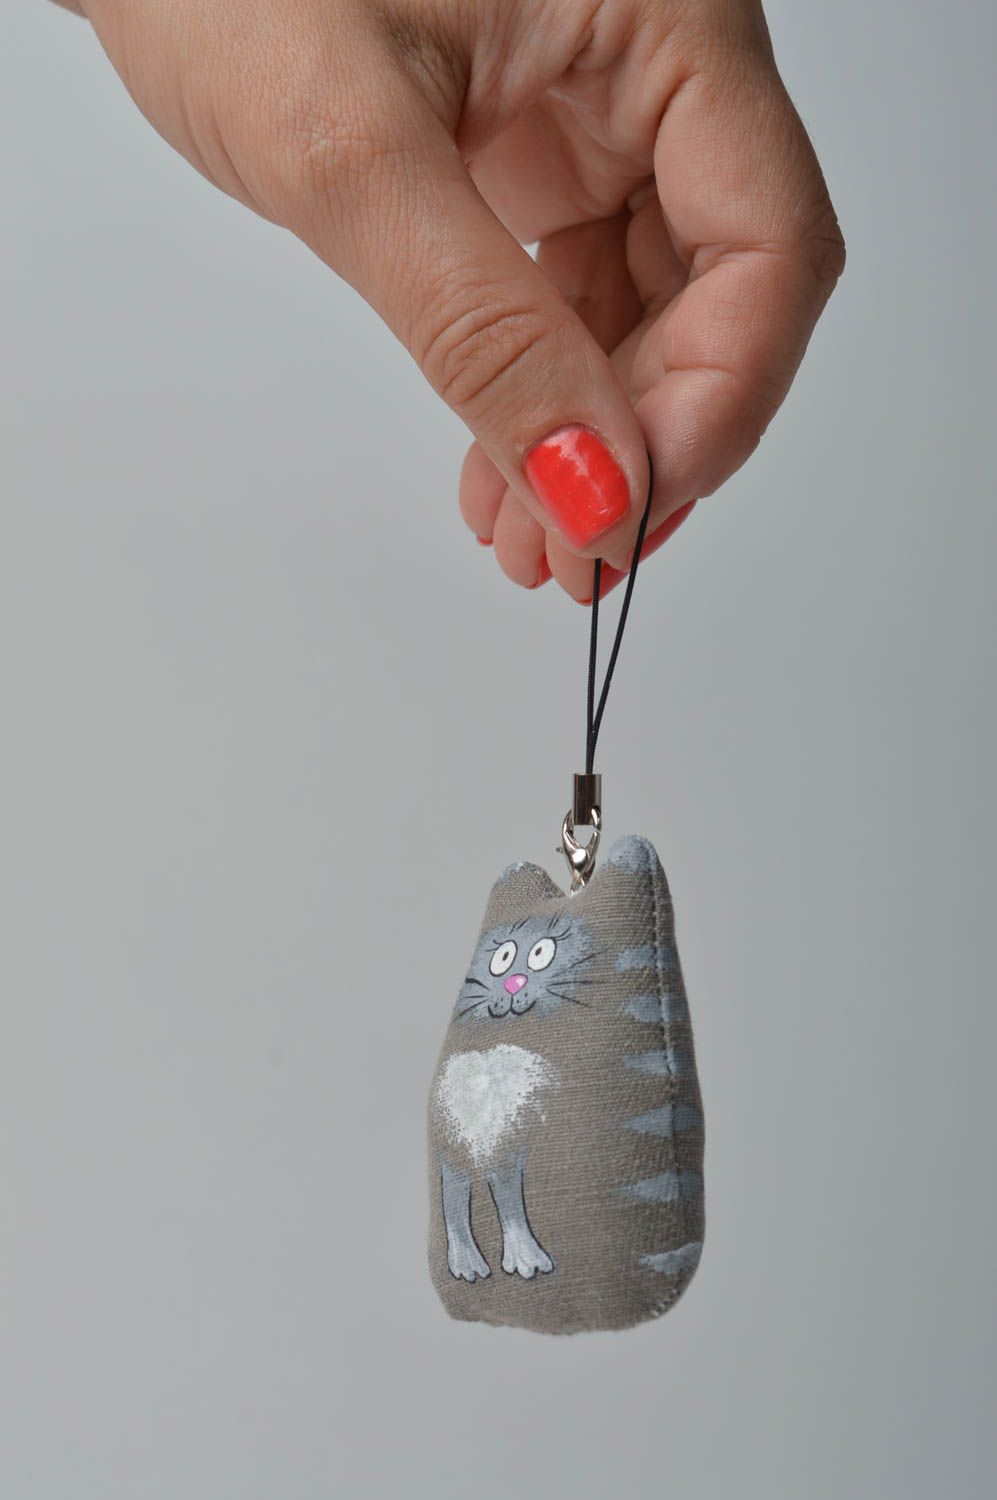 Popular handmade soft keychain stuffed soft toy fabric phone charm gift ideas photo 2